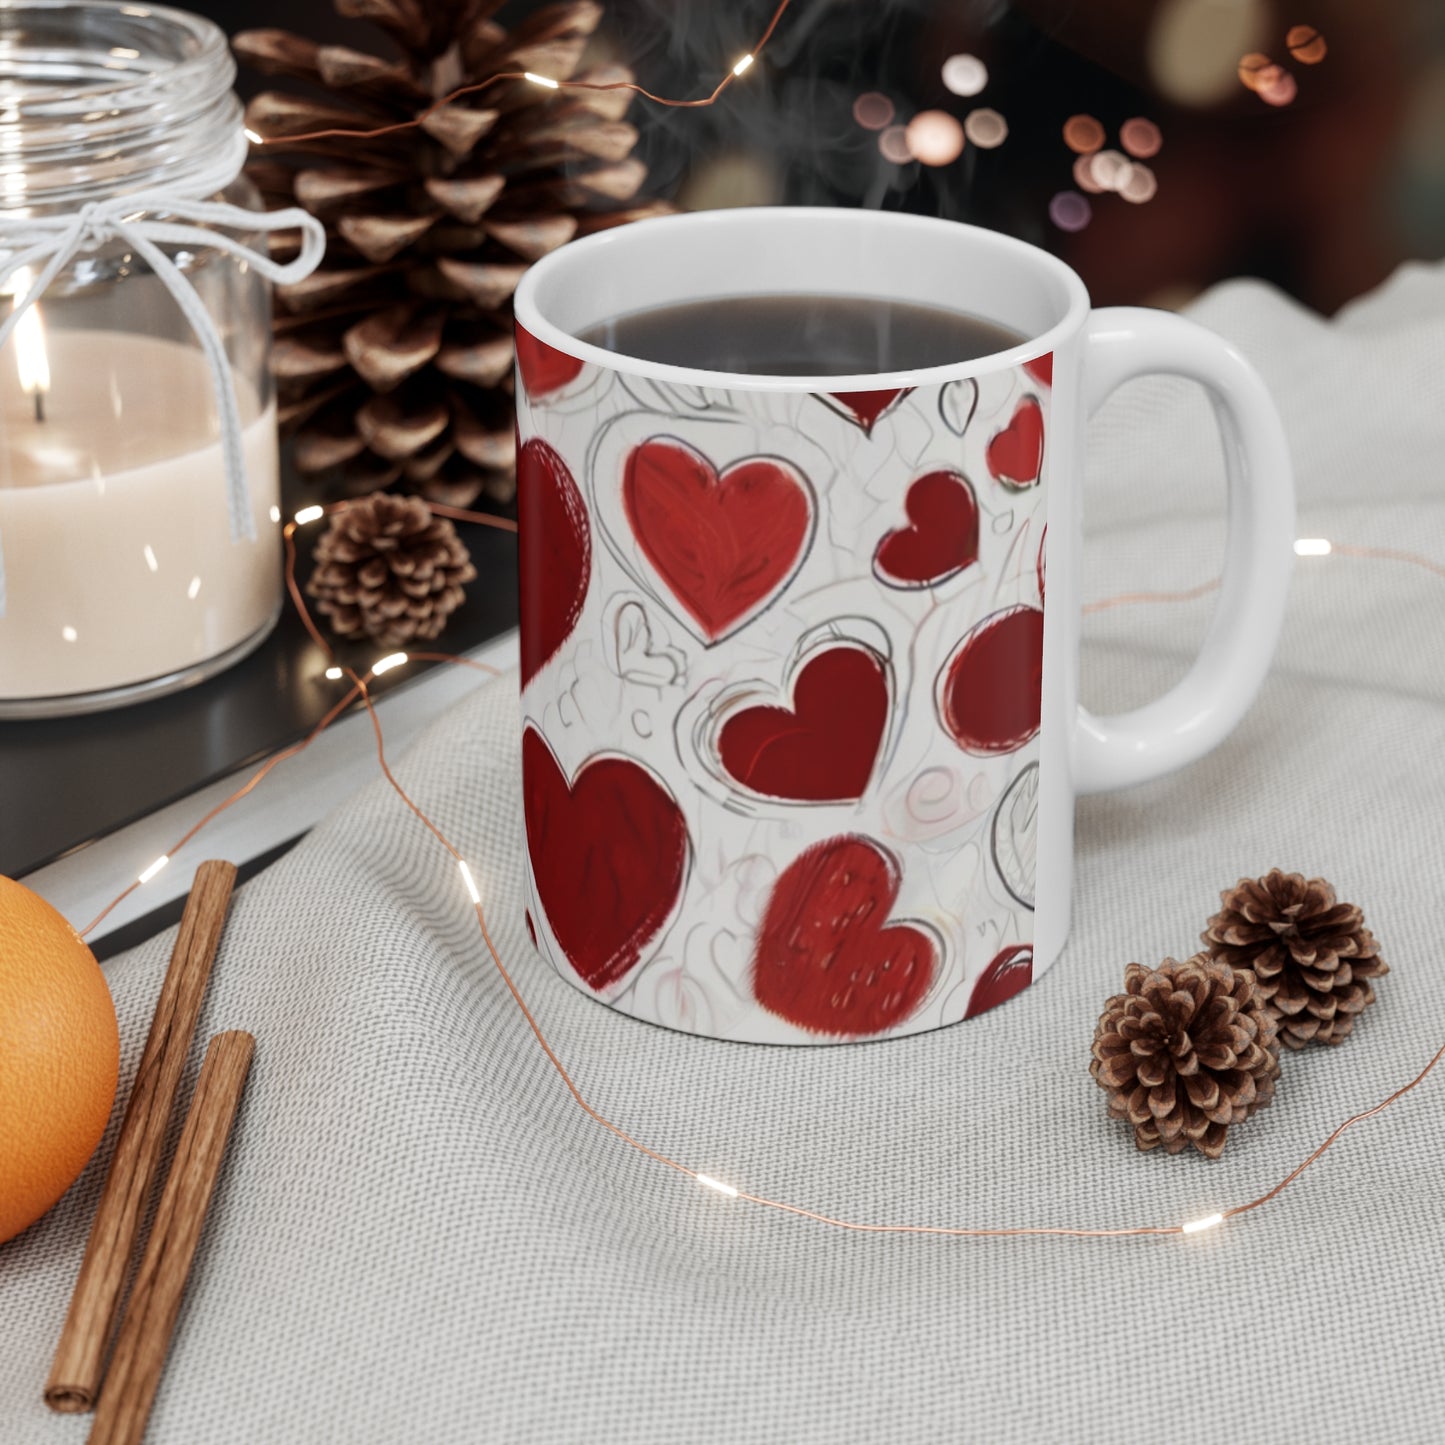 Sketched Red Love Hearts Mug - Ceramic Coffee Mug 11oz